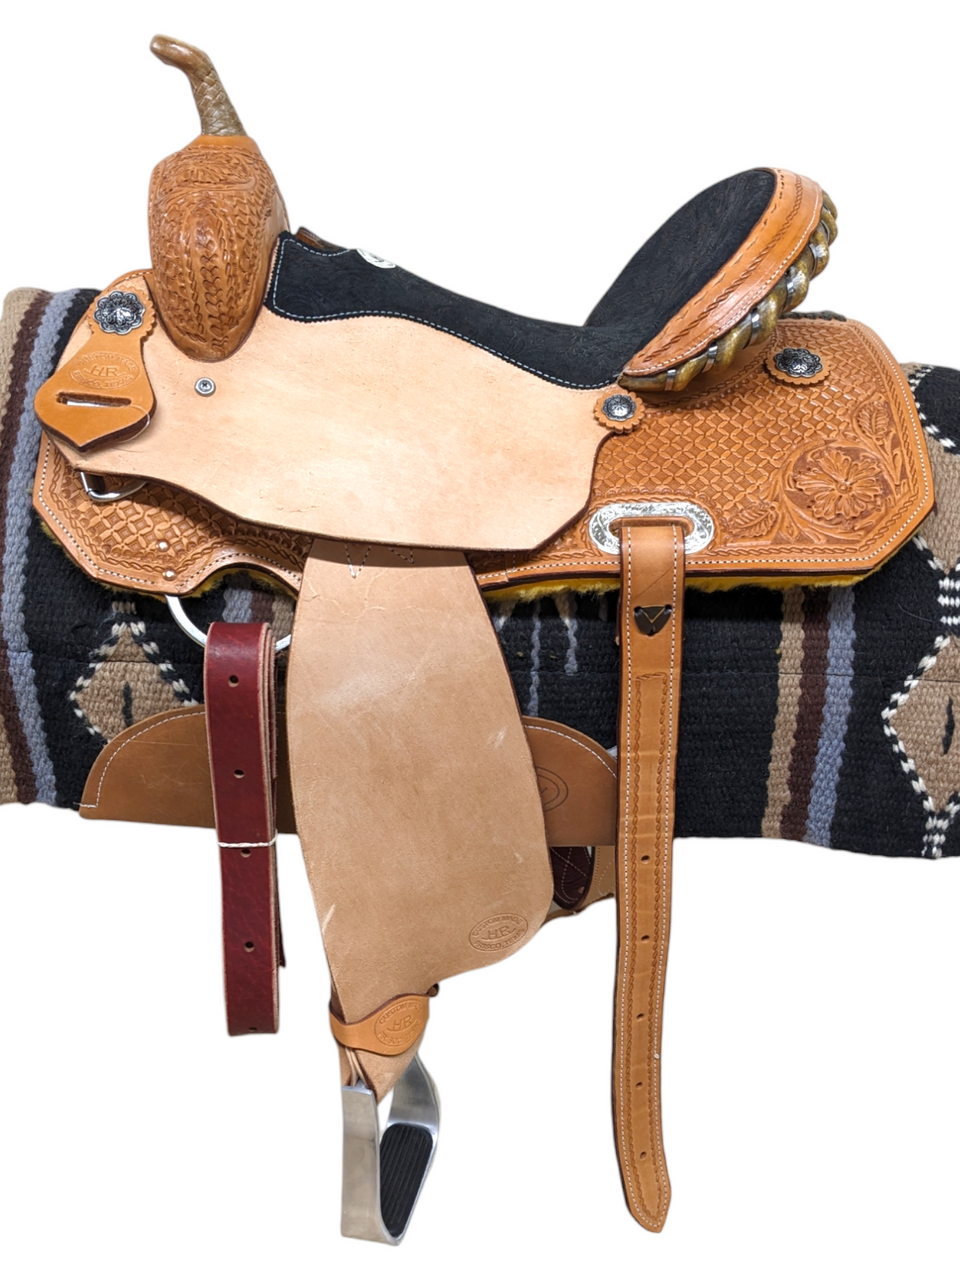 barrel racing saddle